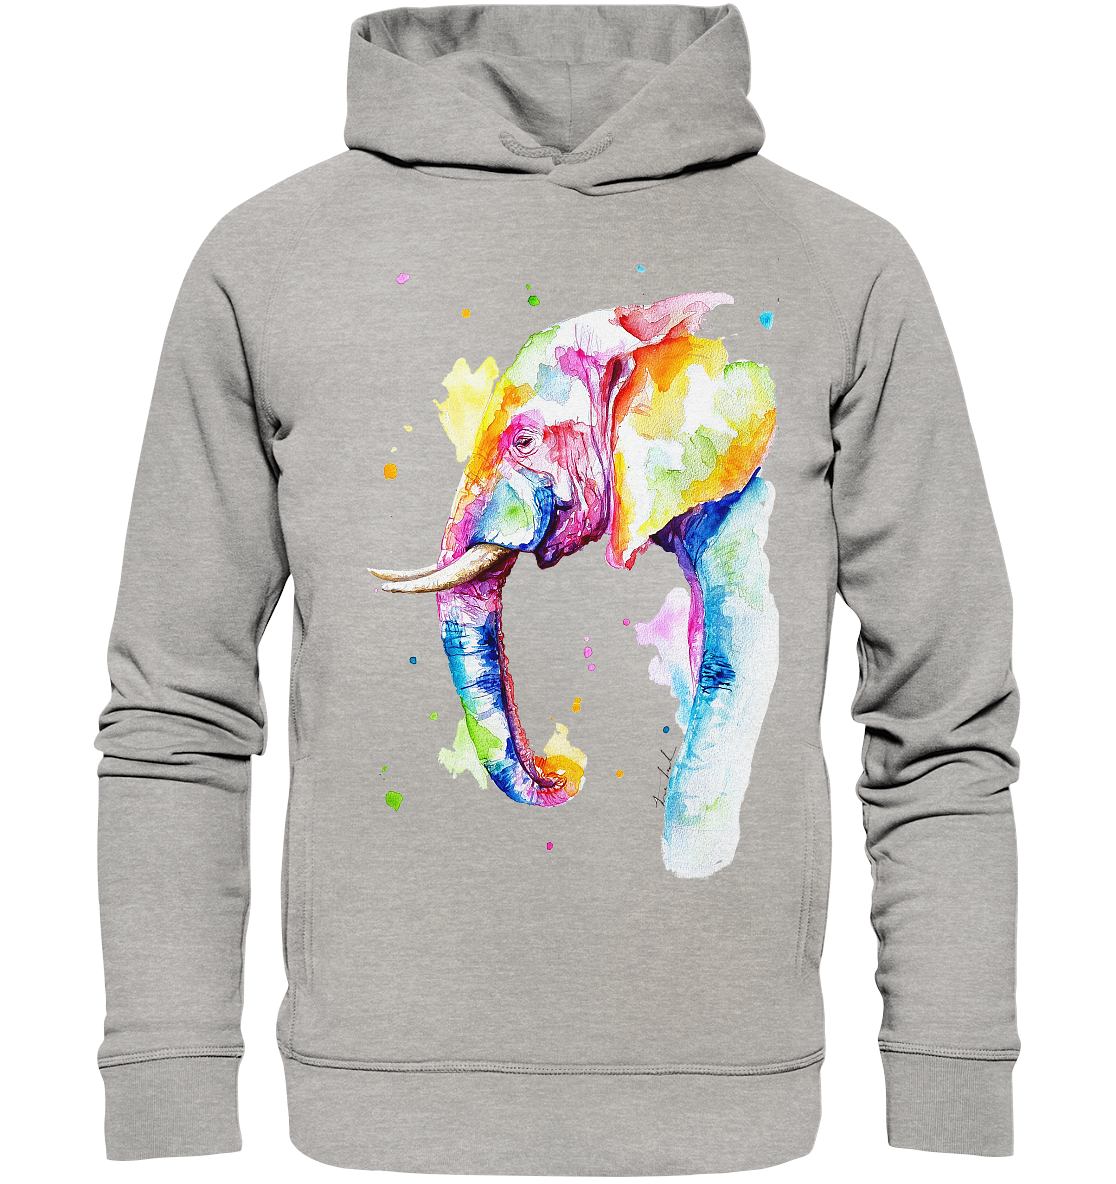 Bunter Elefant - Organic Fashion Hoodie